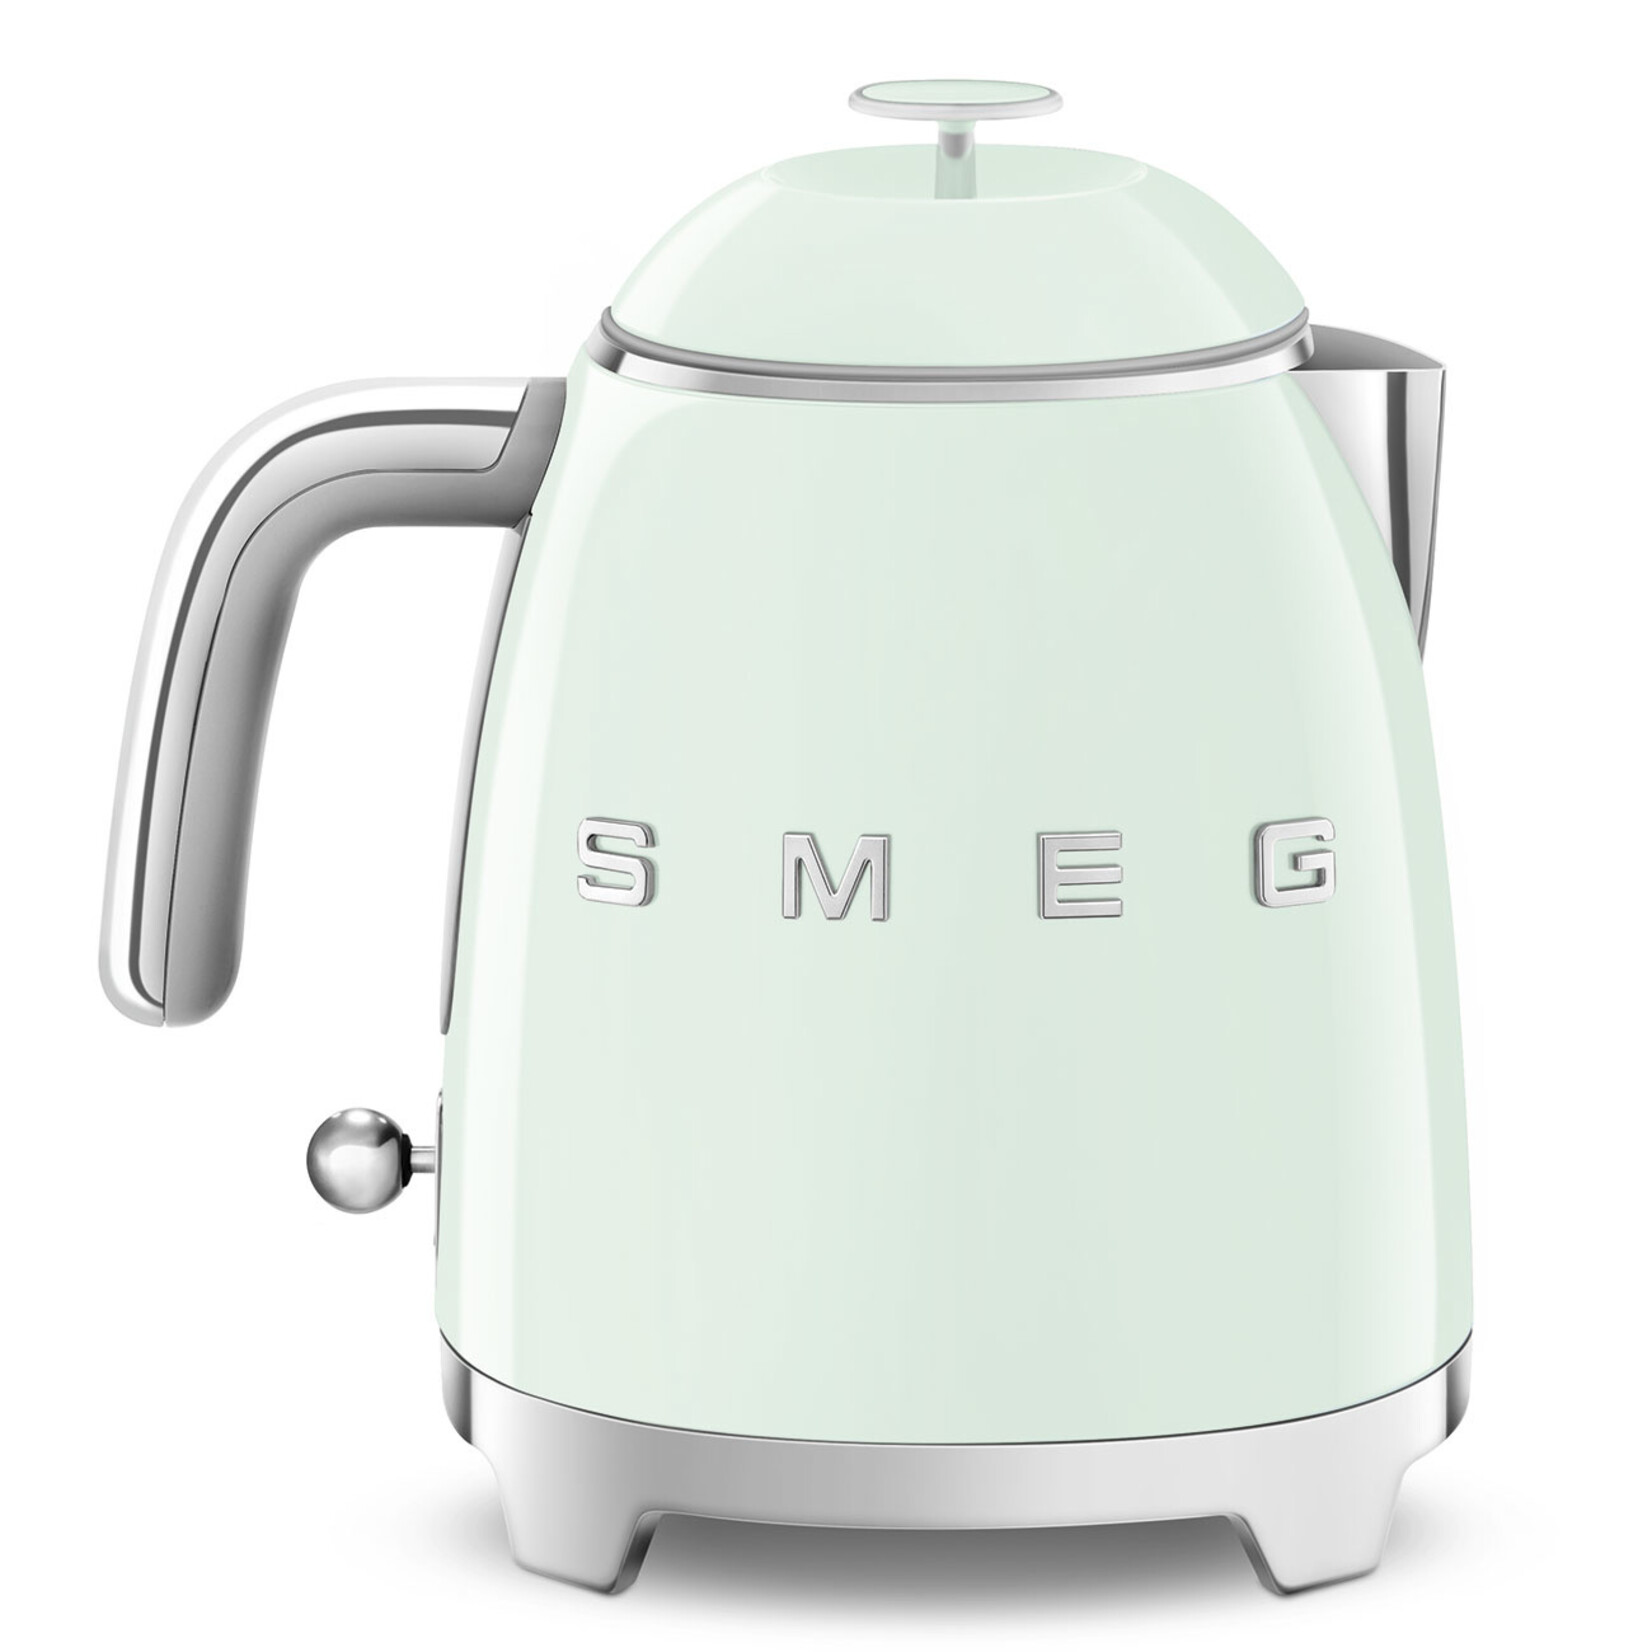 https://cdn.shoplightspeed.com/shops/659299/files/51862904/1652x1652x2/smeg-50s-retro-style-3-cup-mini-kettle.jpg